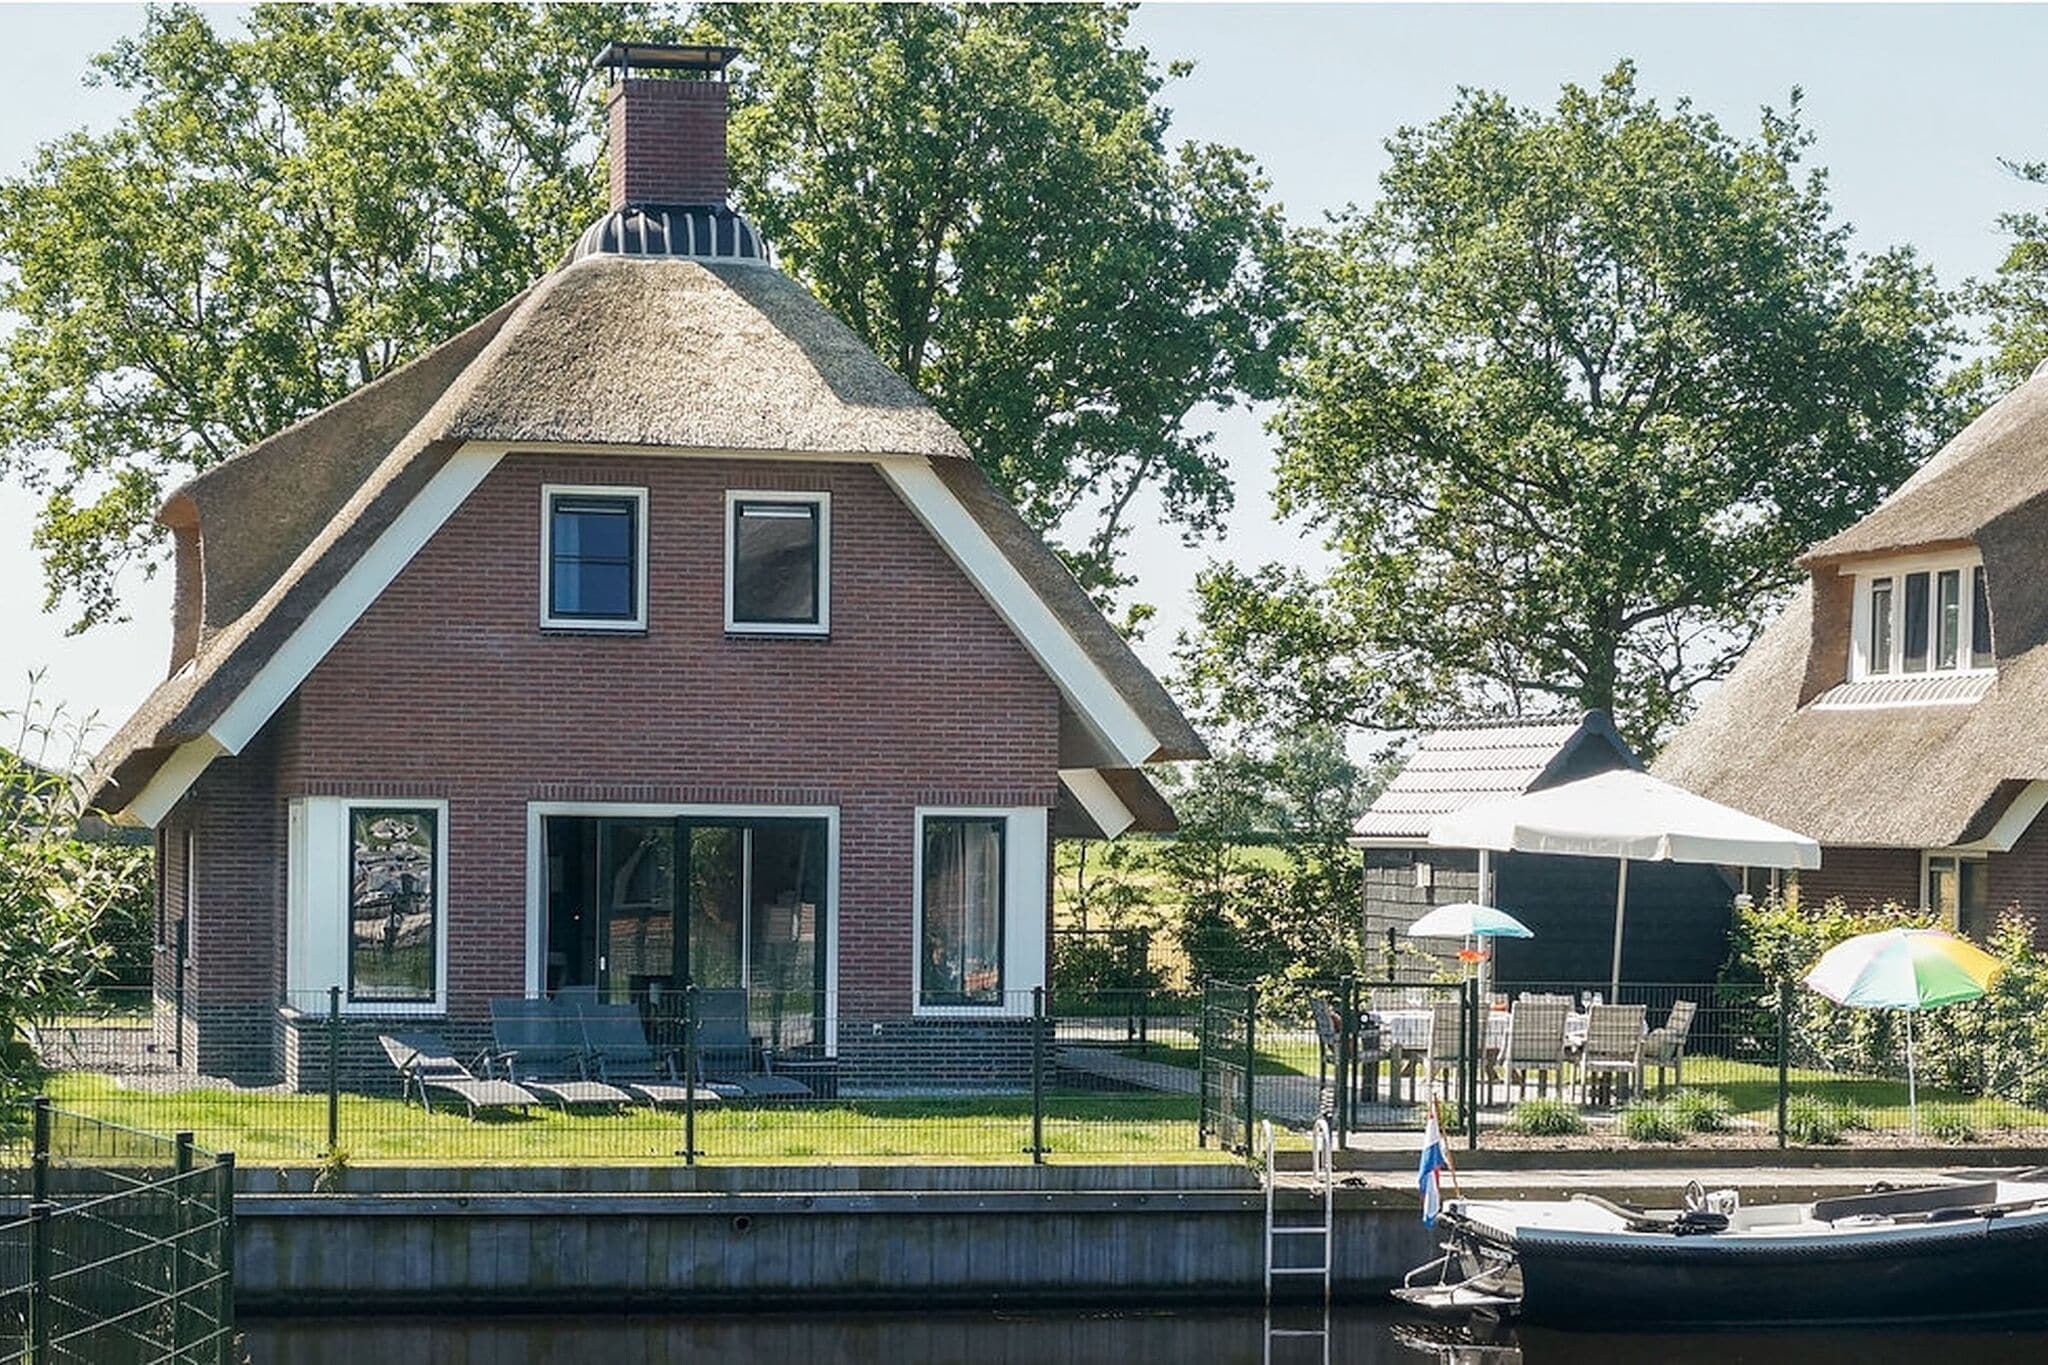 Child-friendly villa on the water in Friesland